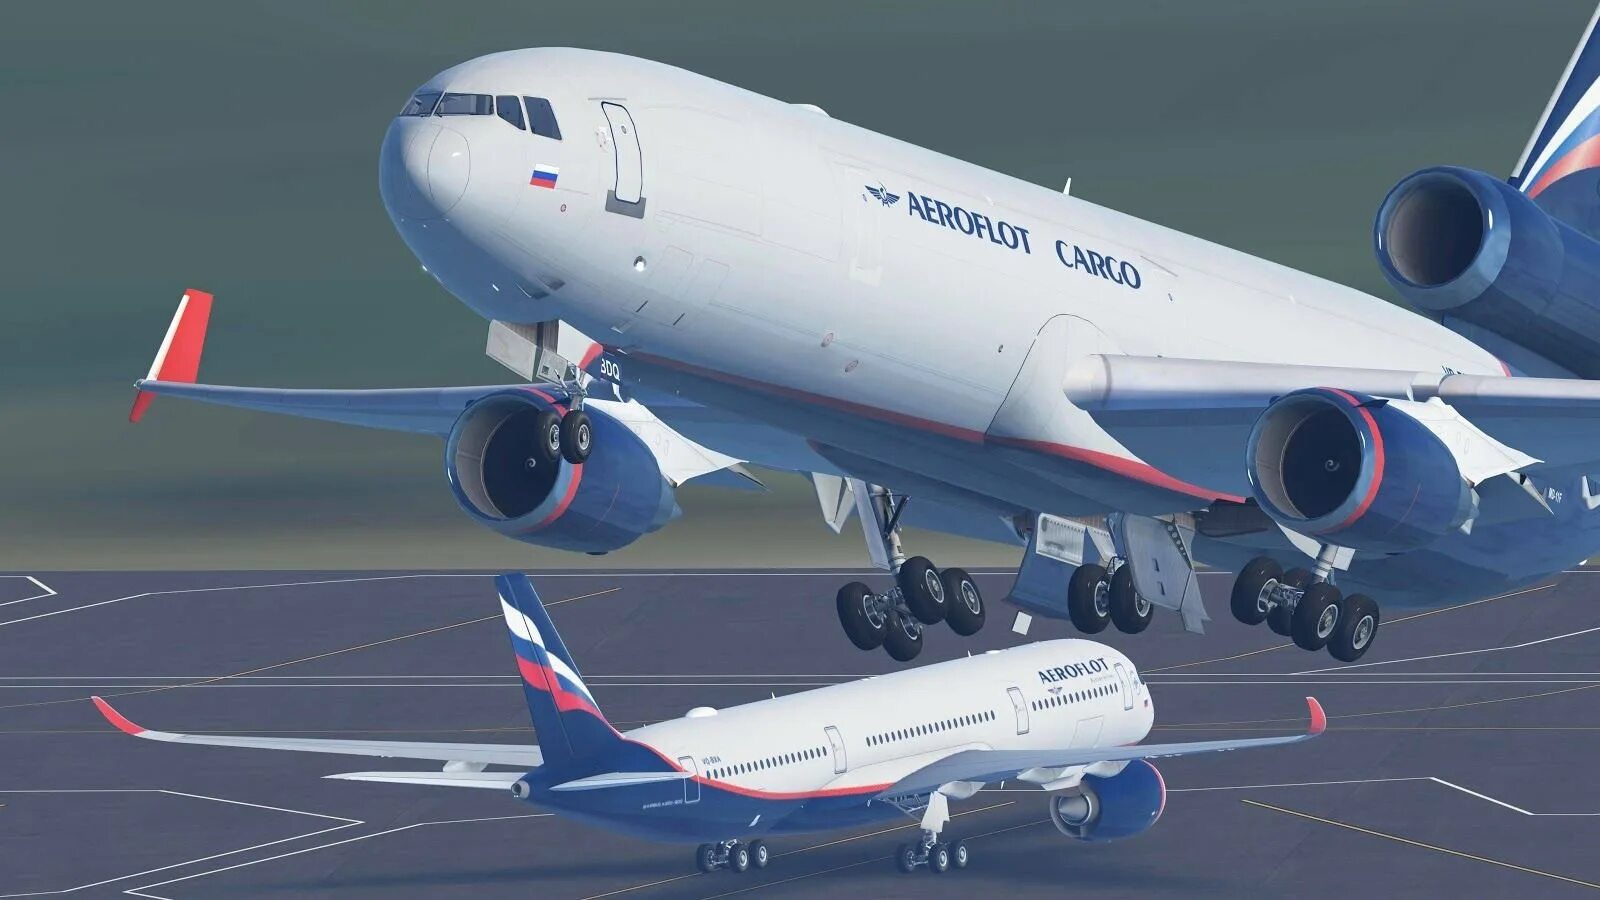 Пауэр аэрофлот. MD-11 Aeroflot Cargo. MD-11f Аэрофлот карго. MD 11 Аэрофлот карго. Md11 самолет Аэрофлот.